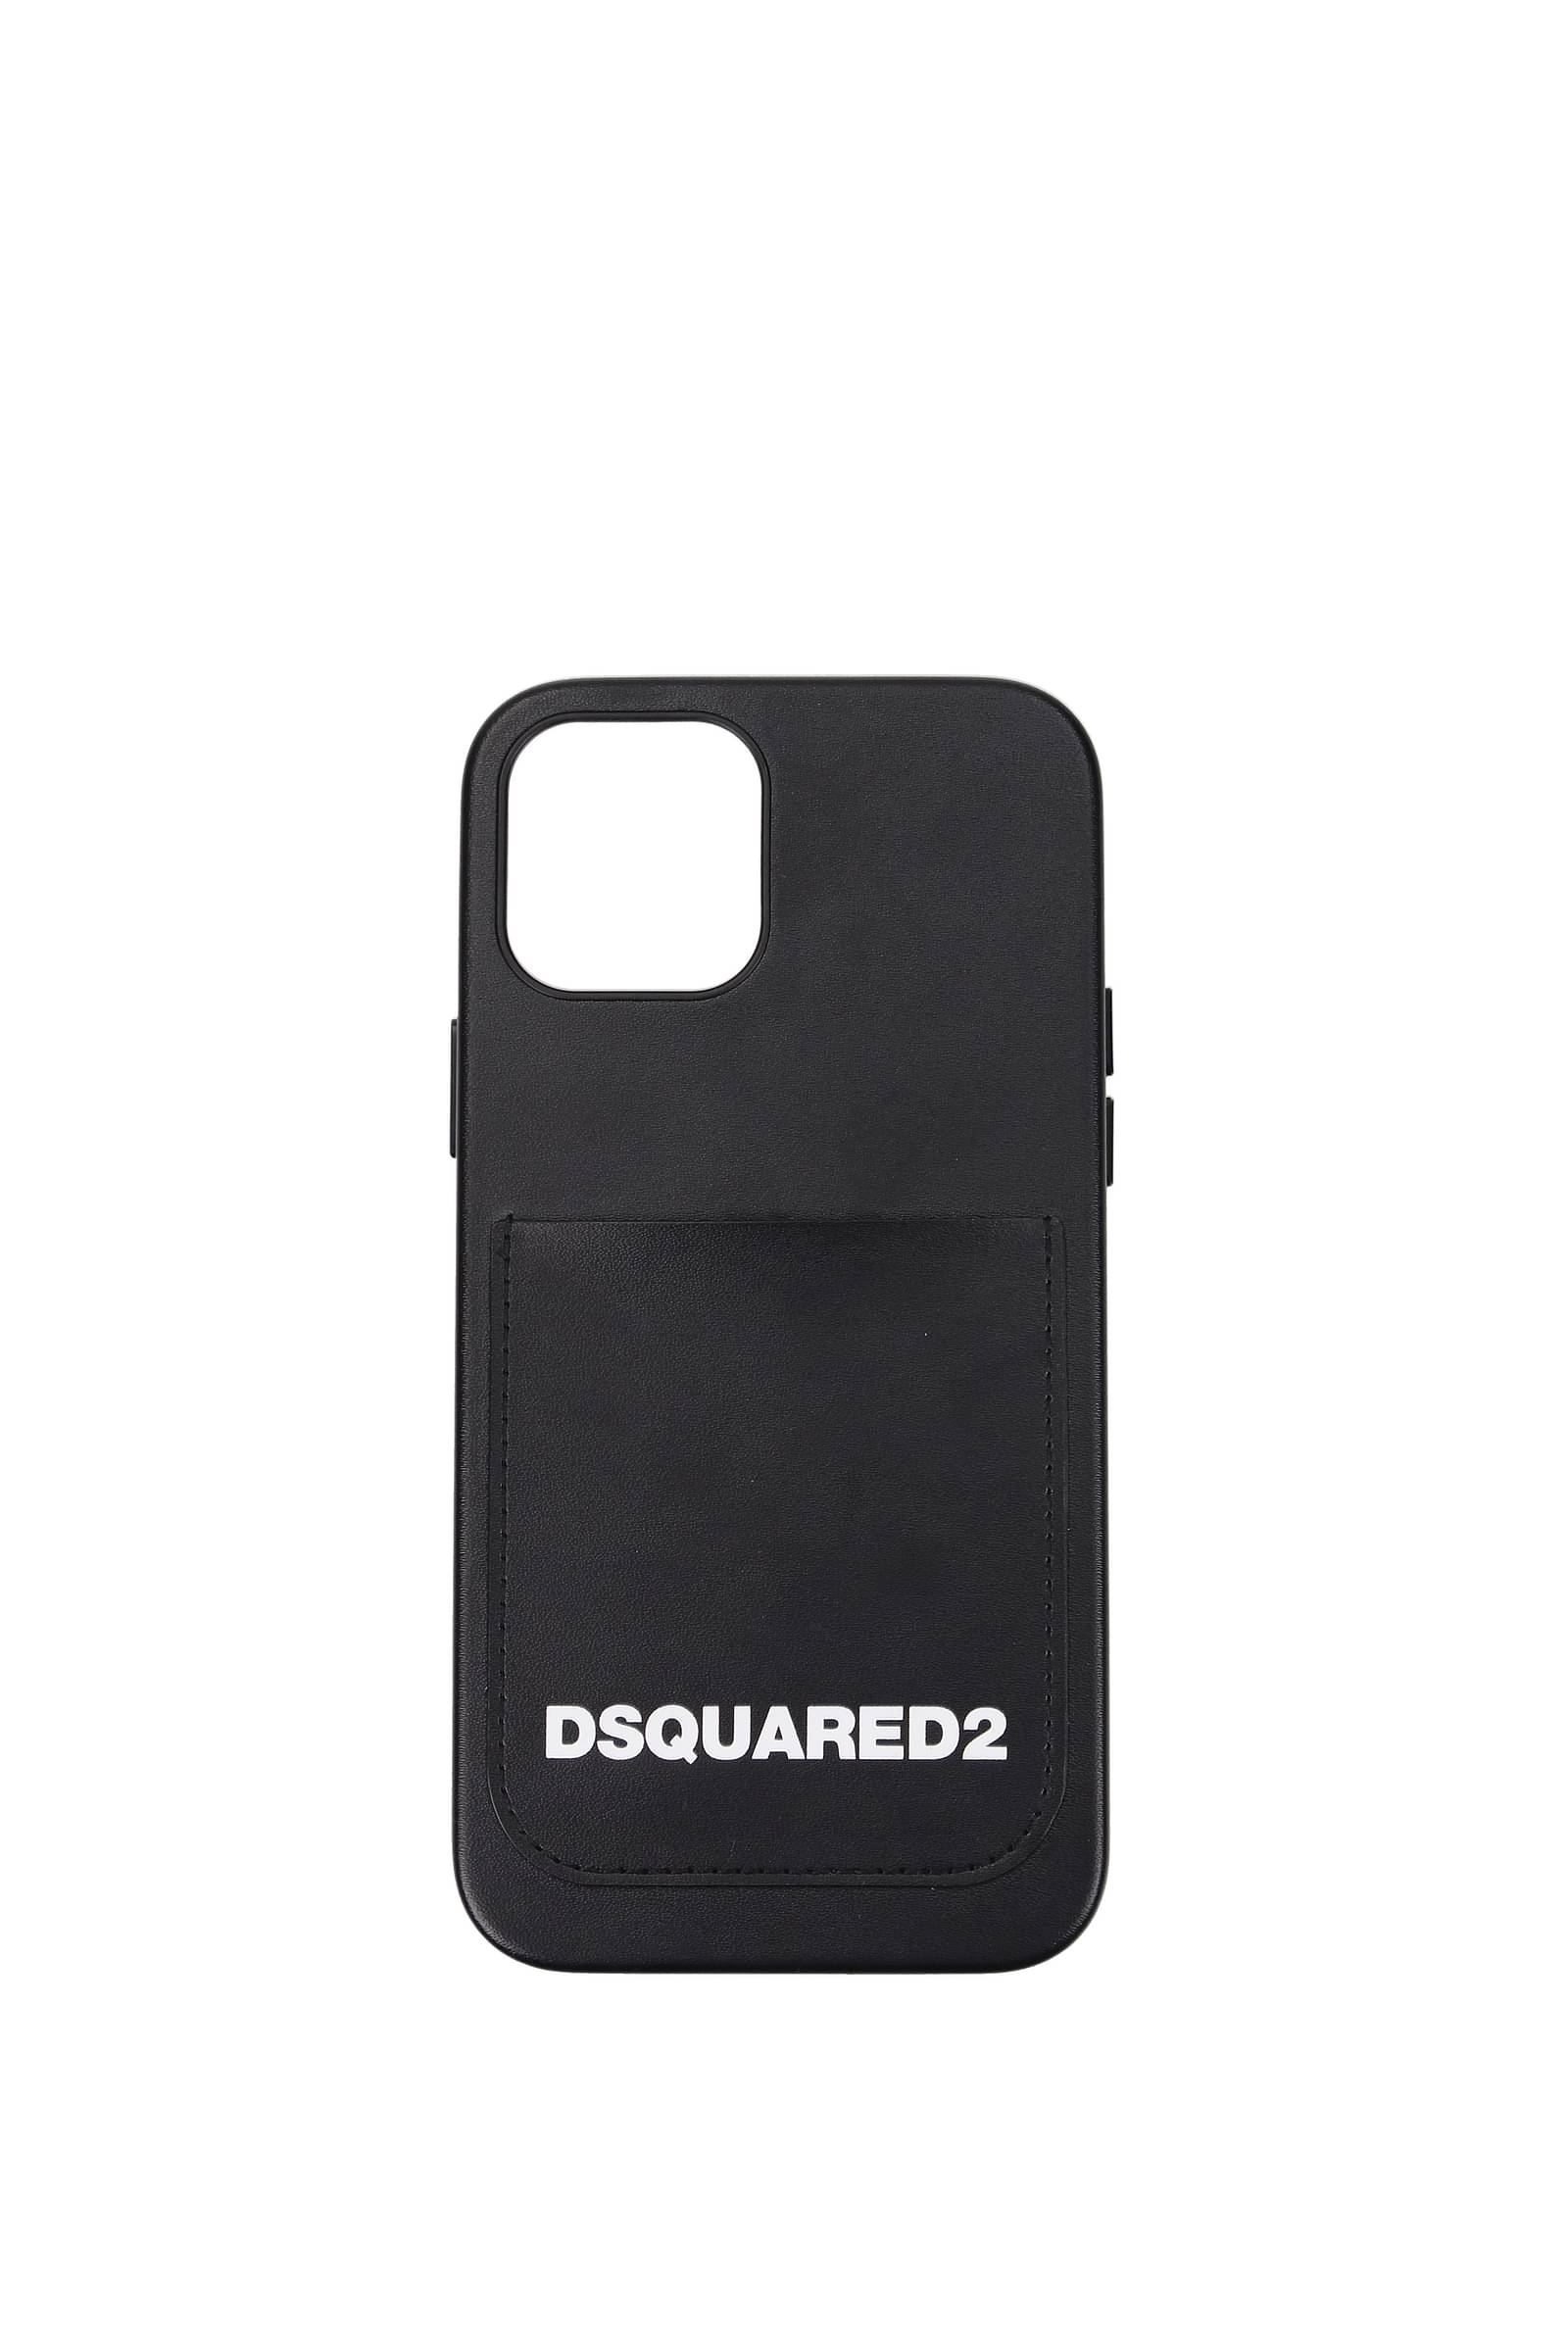 Dsquared2 iPhone cover iphone 12 pro Men ITM0120392025662124